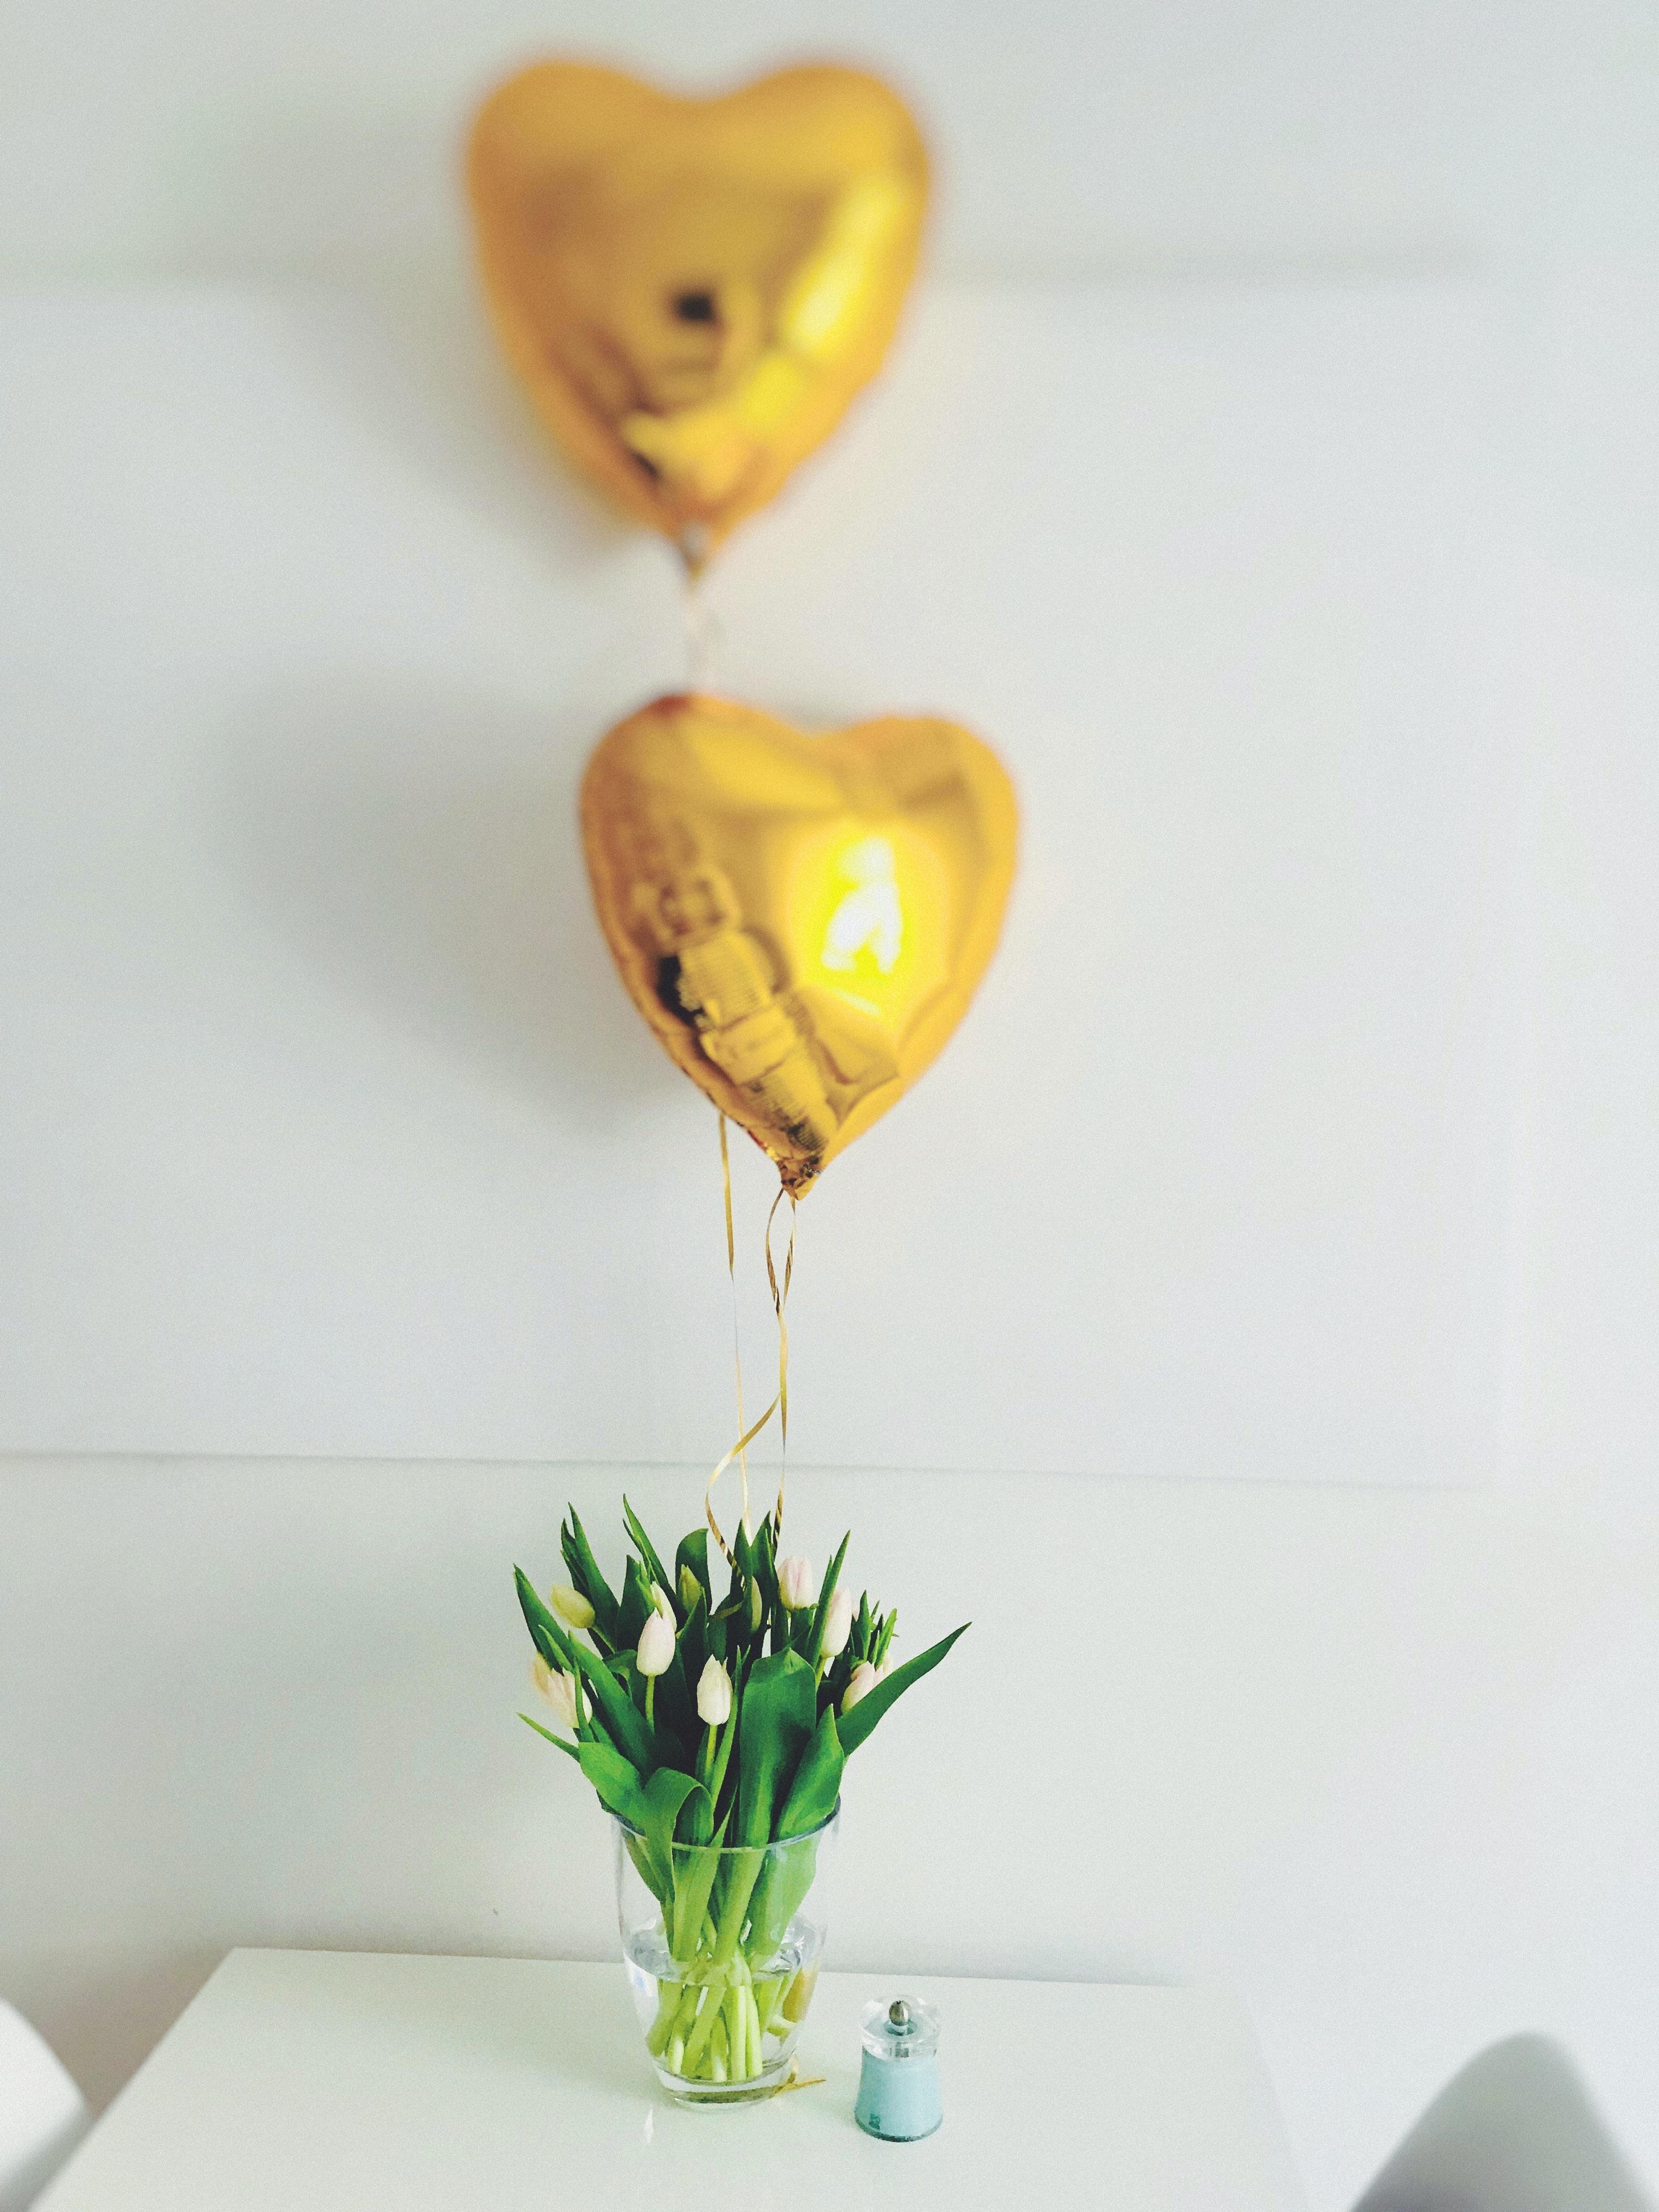 Tulpen gehen immer <3
#blumendeko #fruehling #ballons 